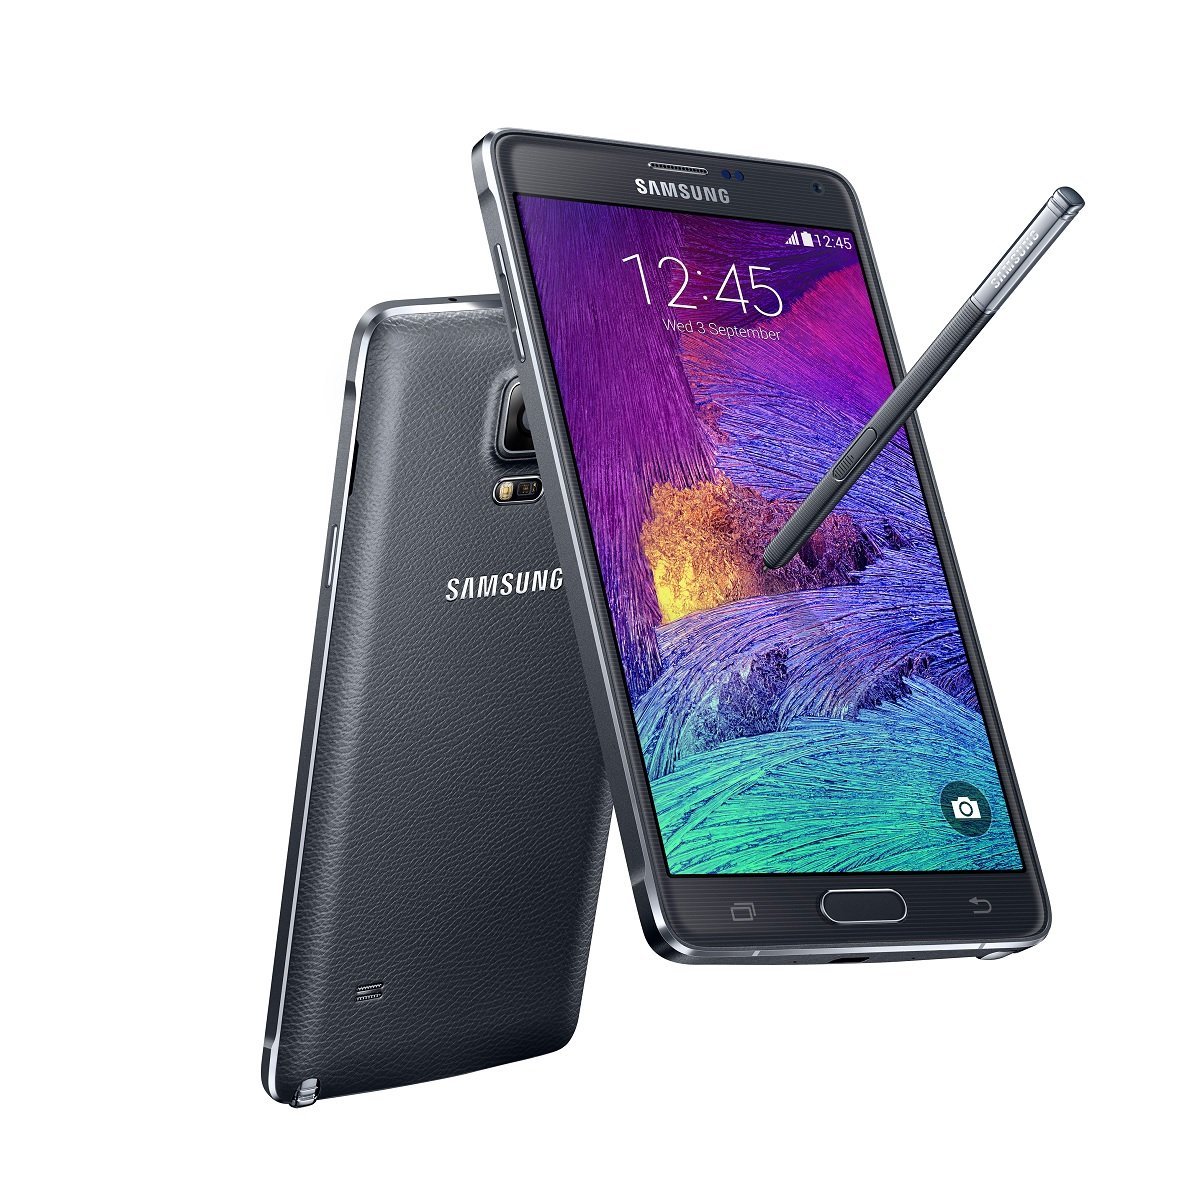 Samsung Galaxy Note 4 32GB Black Unlocked